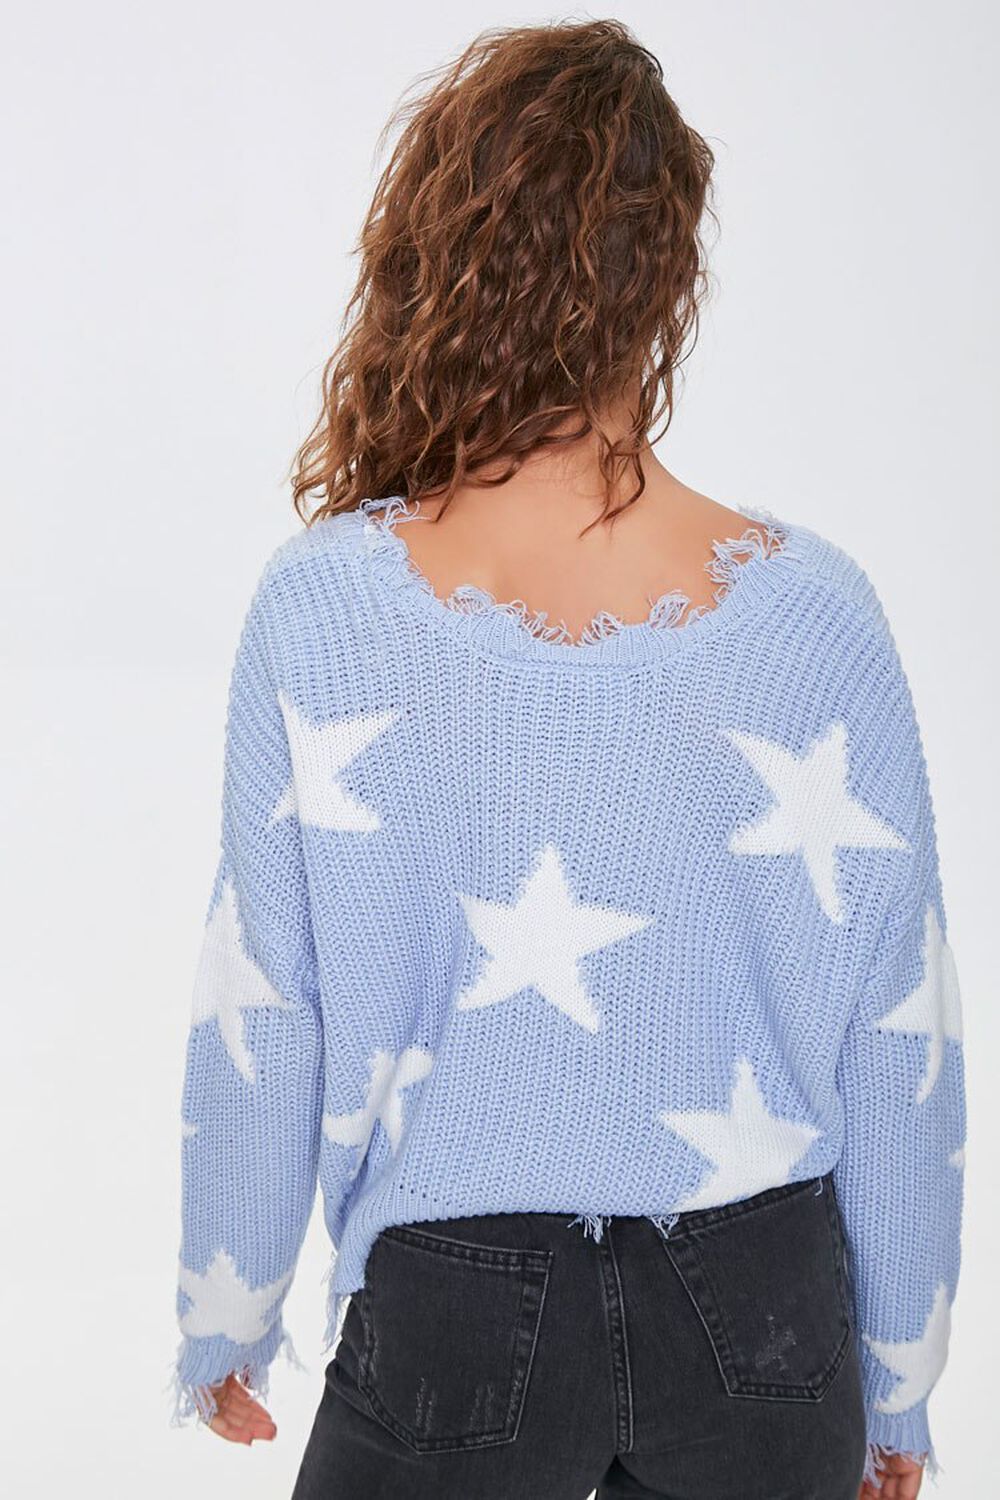 BLUE/CREAM Distressed Star Print Sweater, image 3